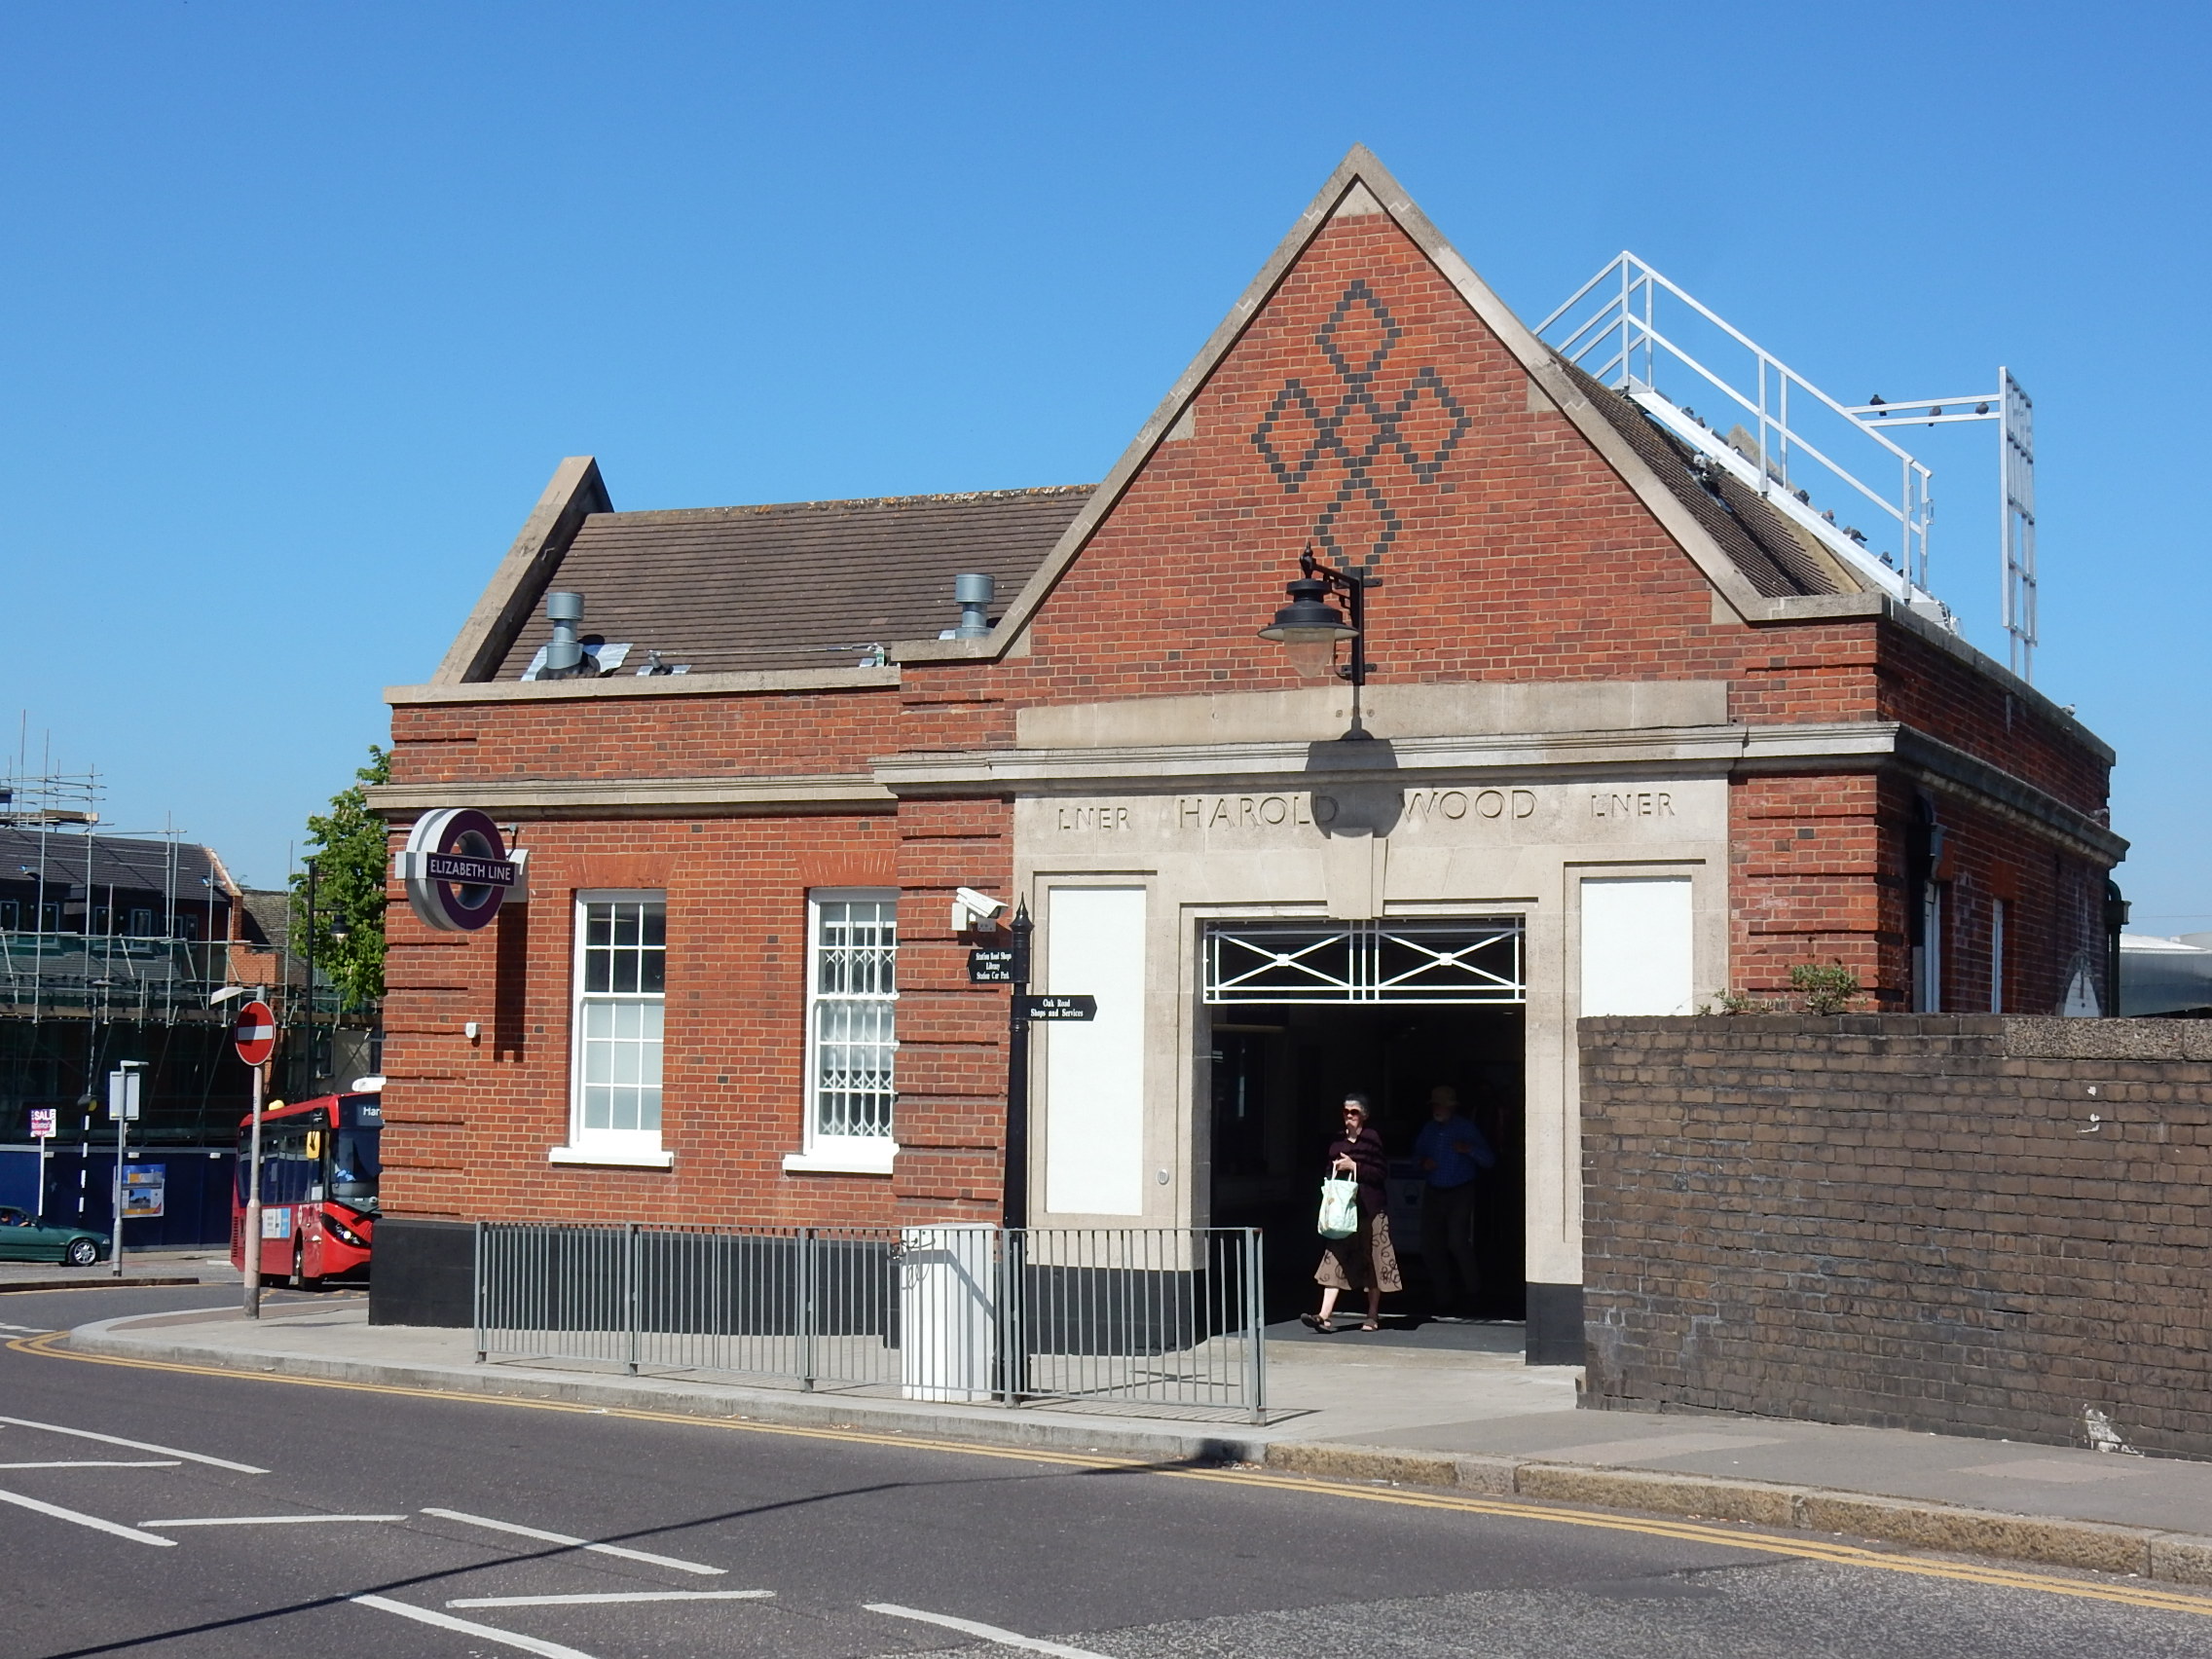 Harold Wood railway station